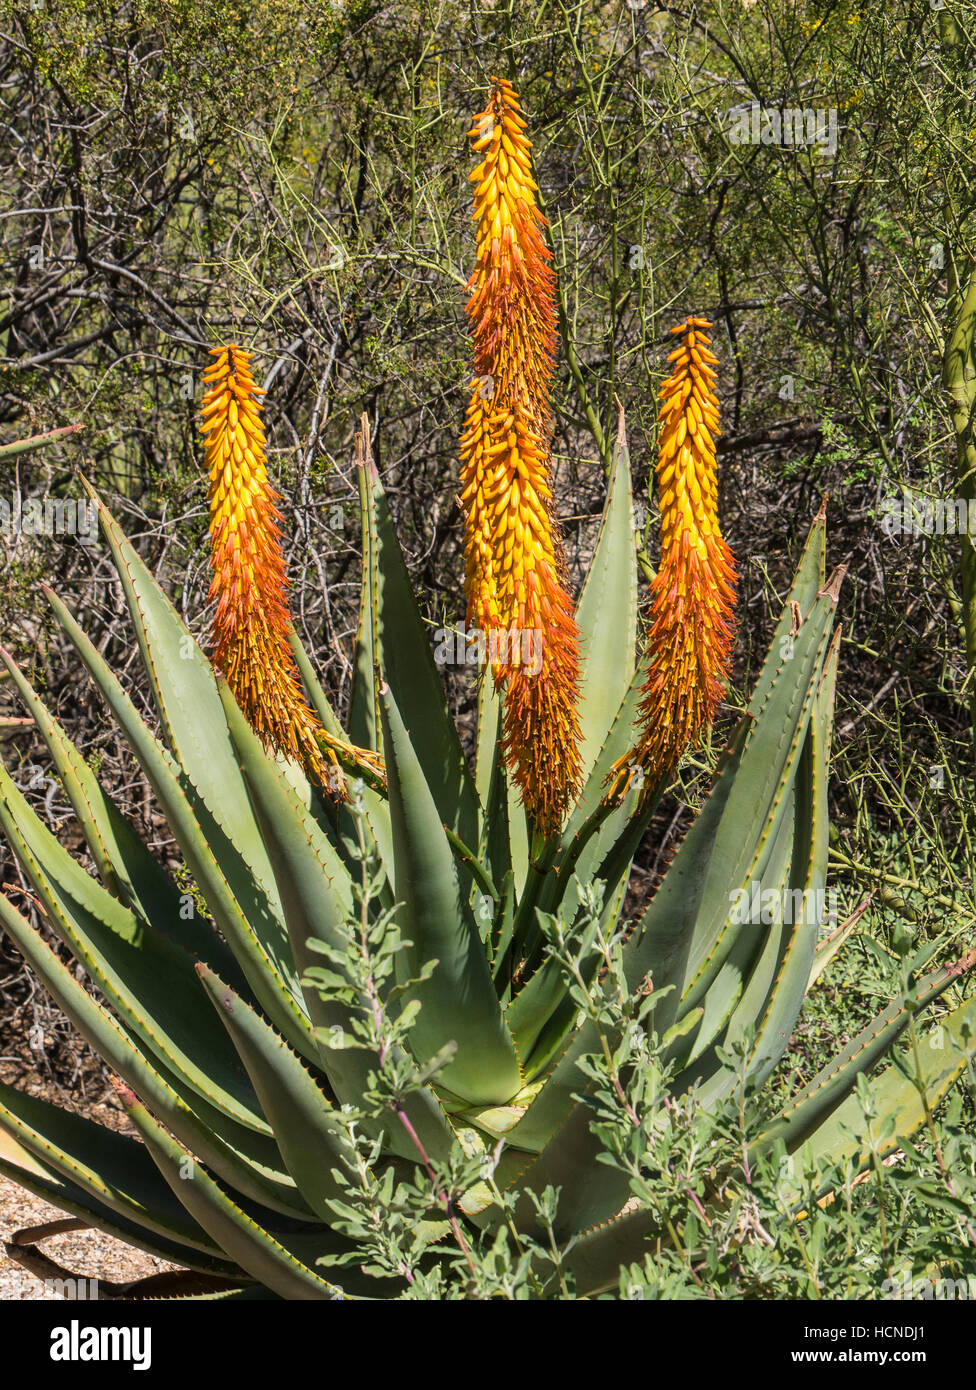 Cape Aloe (Aloe ferox) from South Africa, Tuscon Botanical Gardens, Tucson, Arizona. Stock Photo